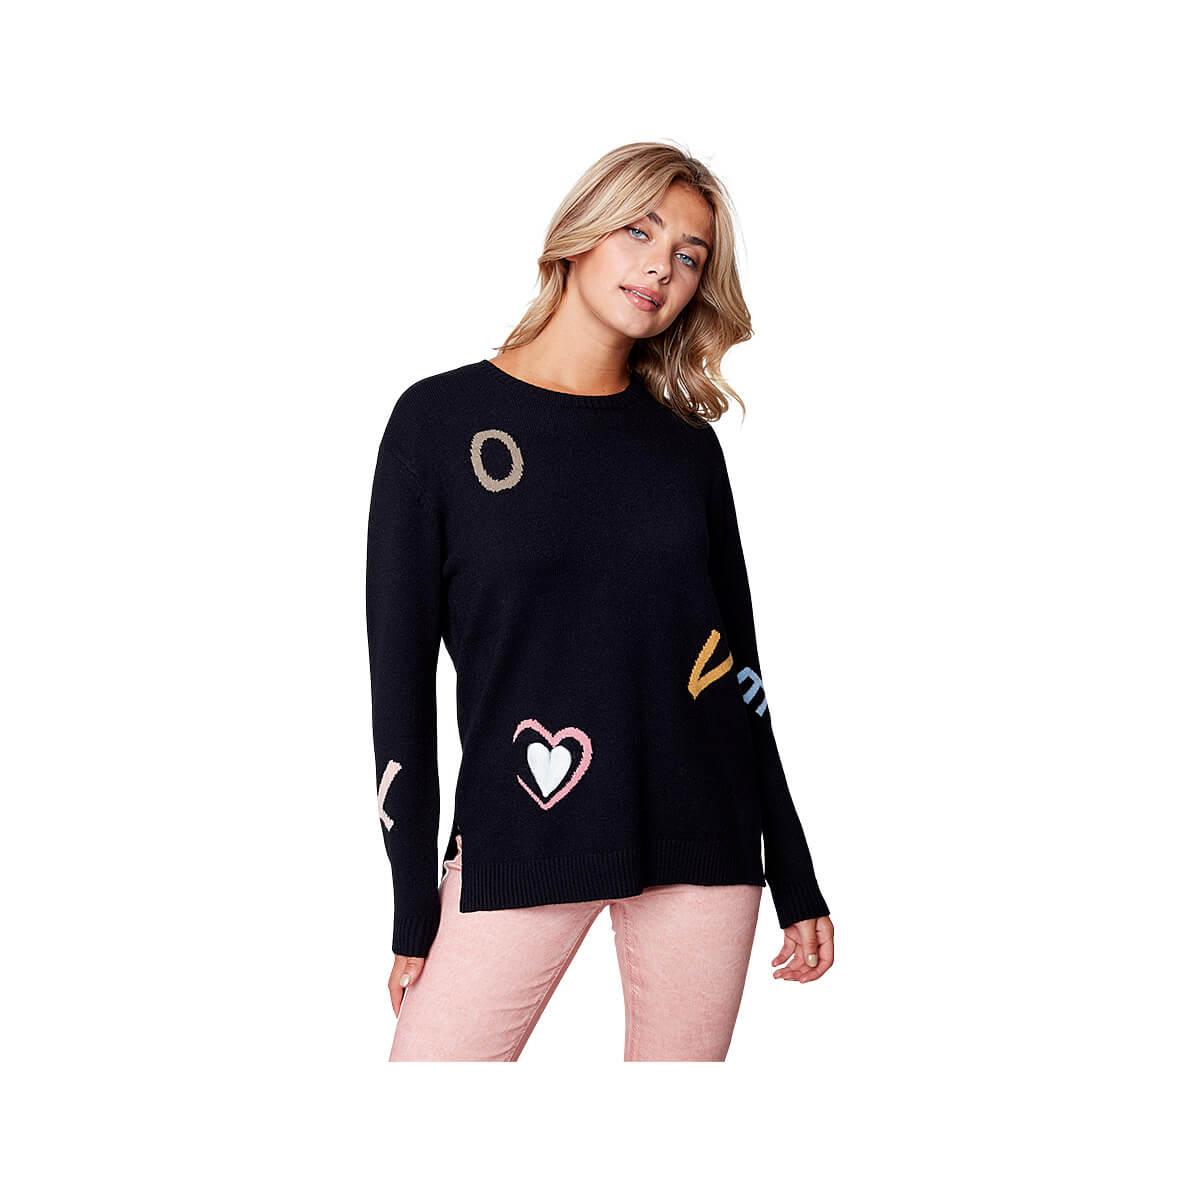  Women's Super Plush Love Sweater